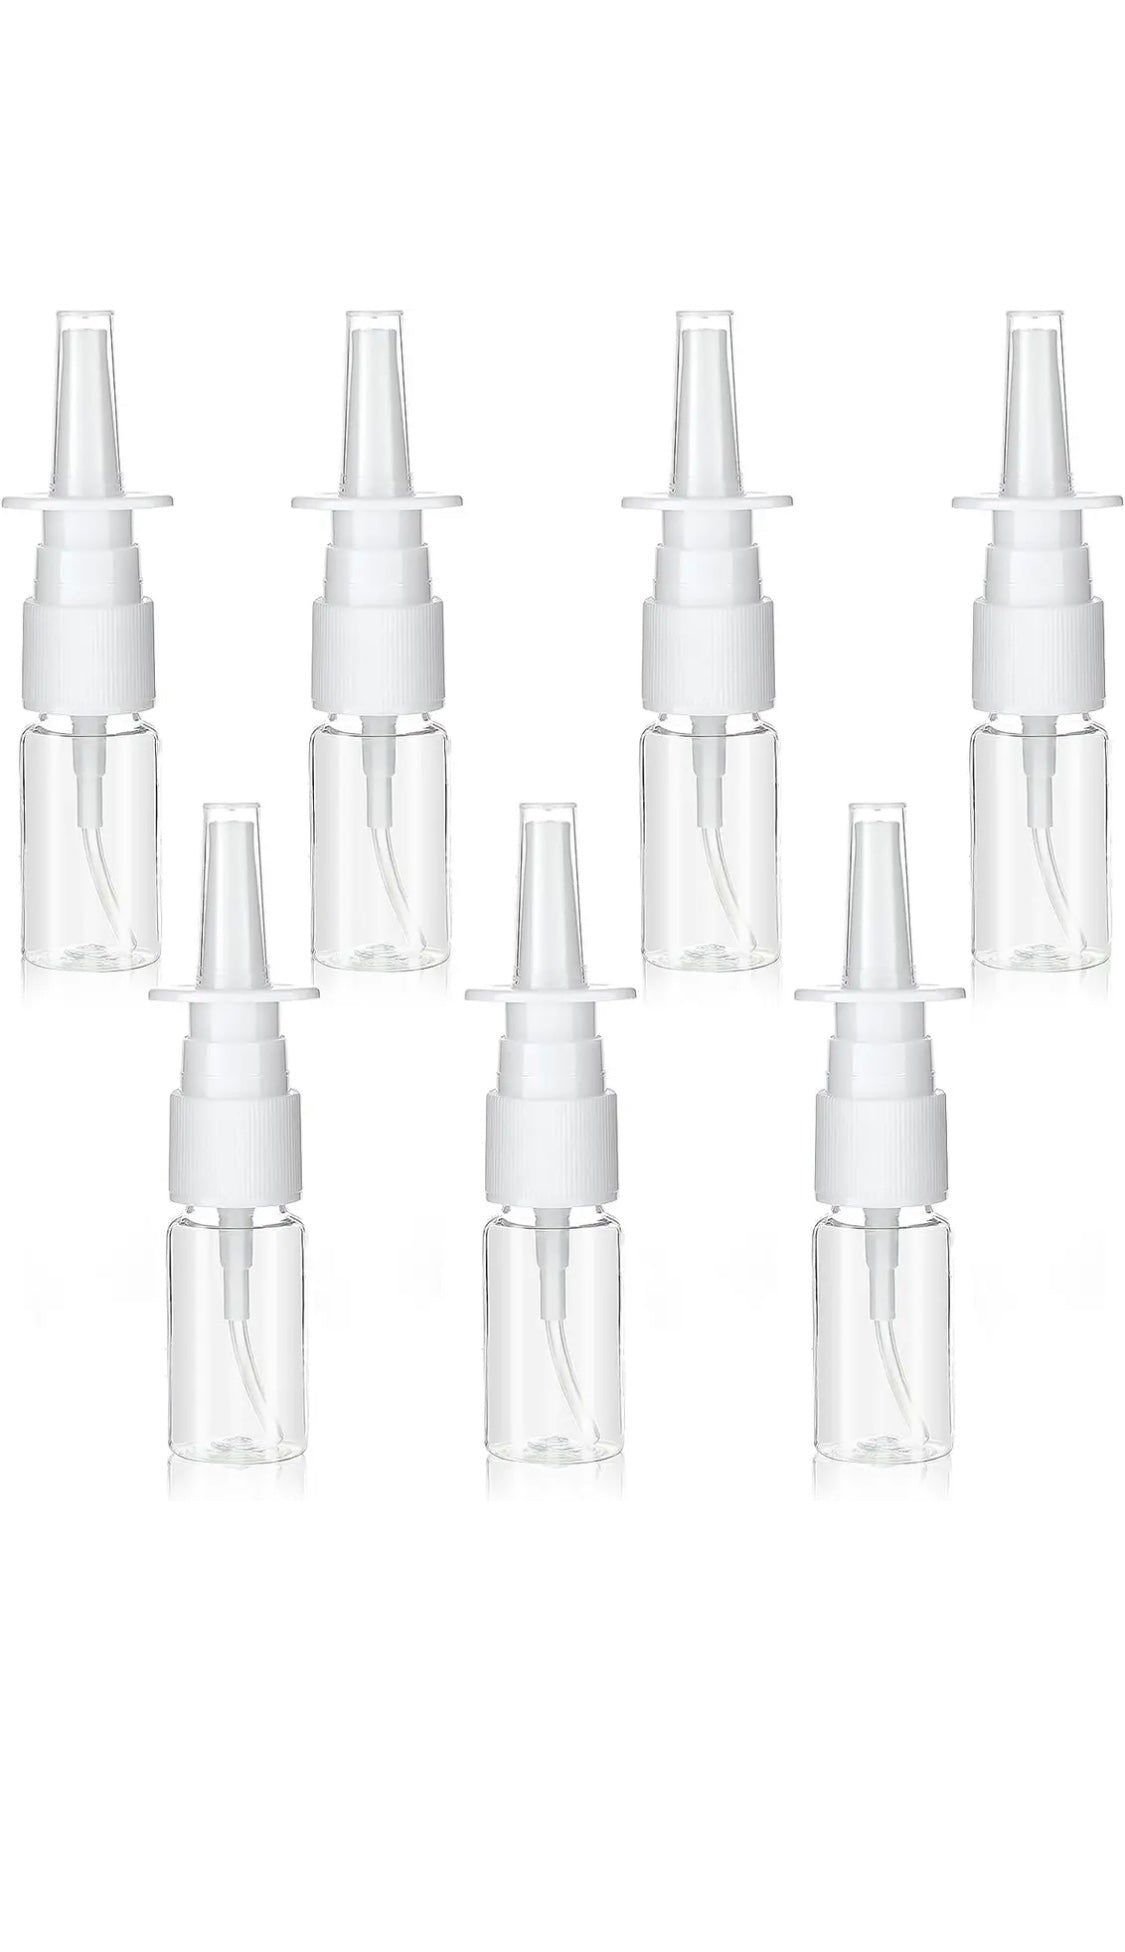 10ml Clear Nasal Spray Bottles - 10,000 PCS